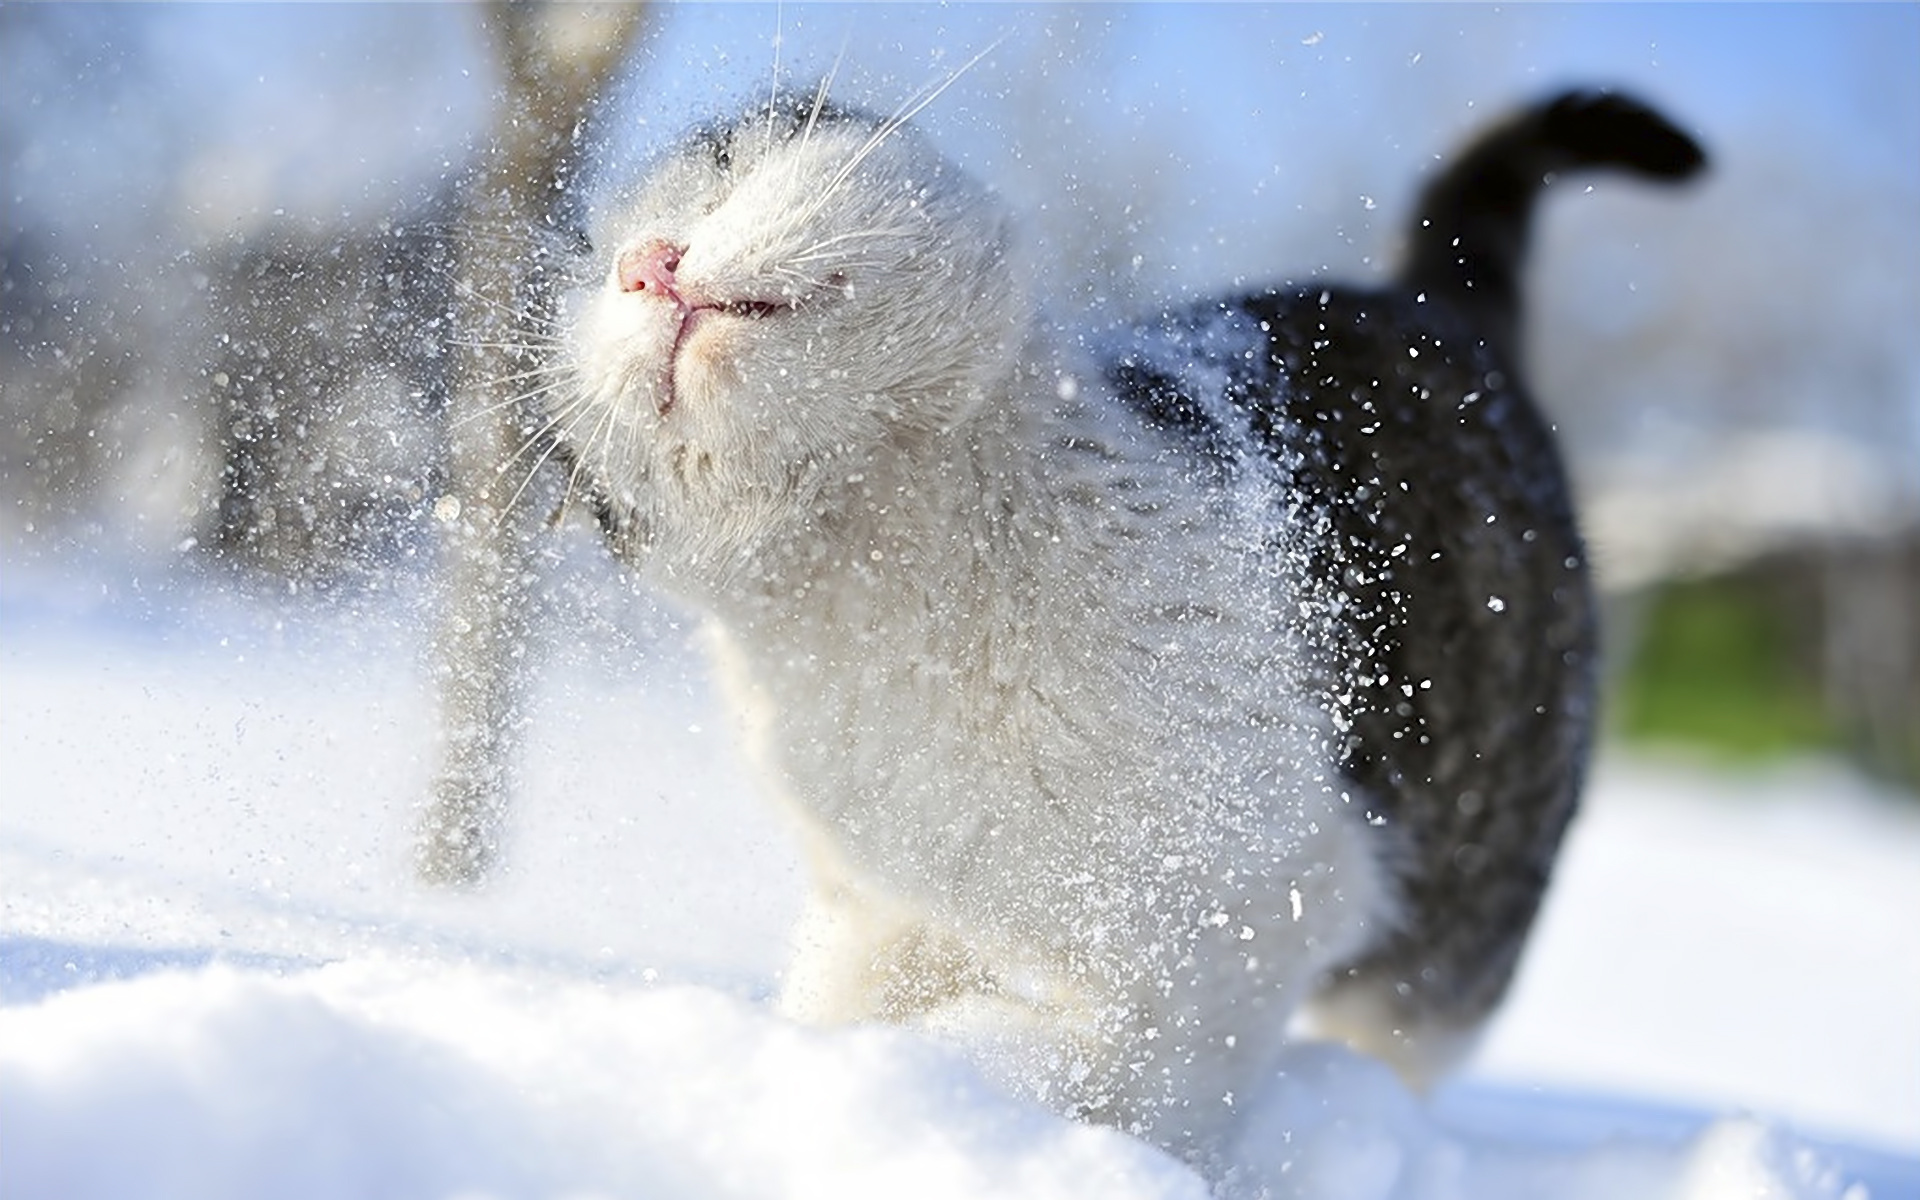 http://yesofcorsa.com/wp-content/uploads/2018/12/Animals-In-The-Snow-Best-Wallpaper.jpg